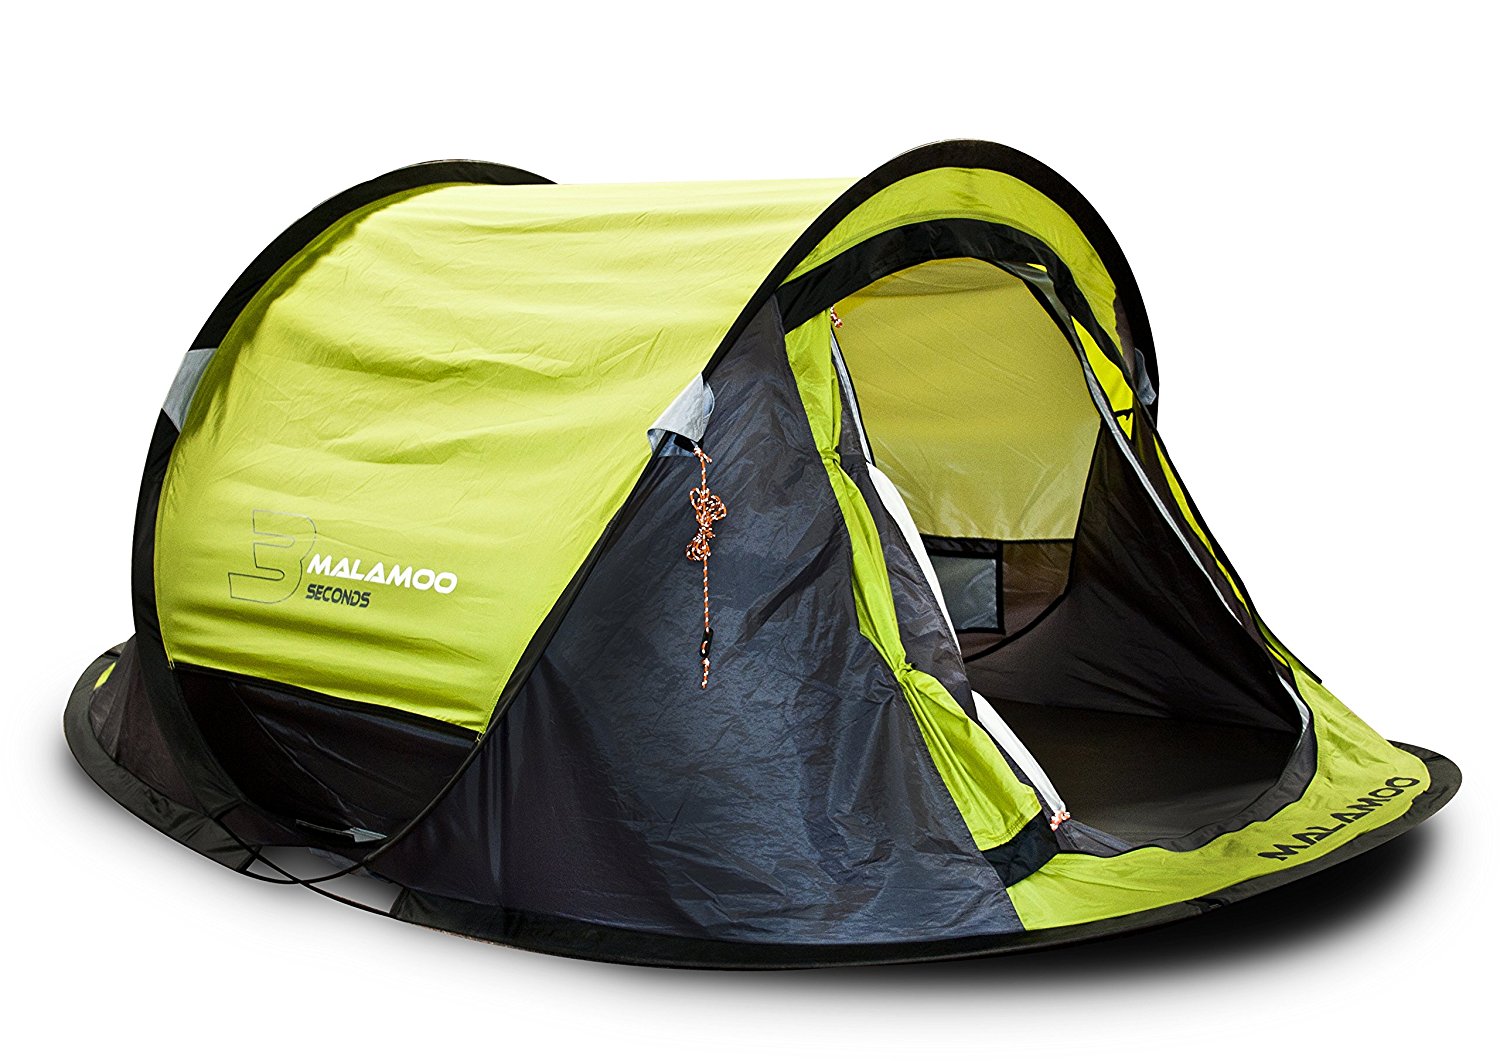 Malamoo Classic 2 person tent